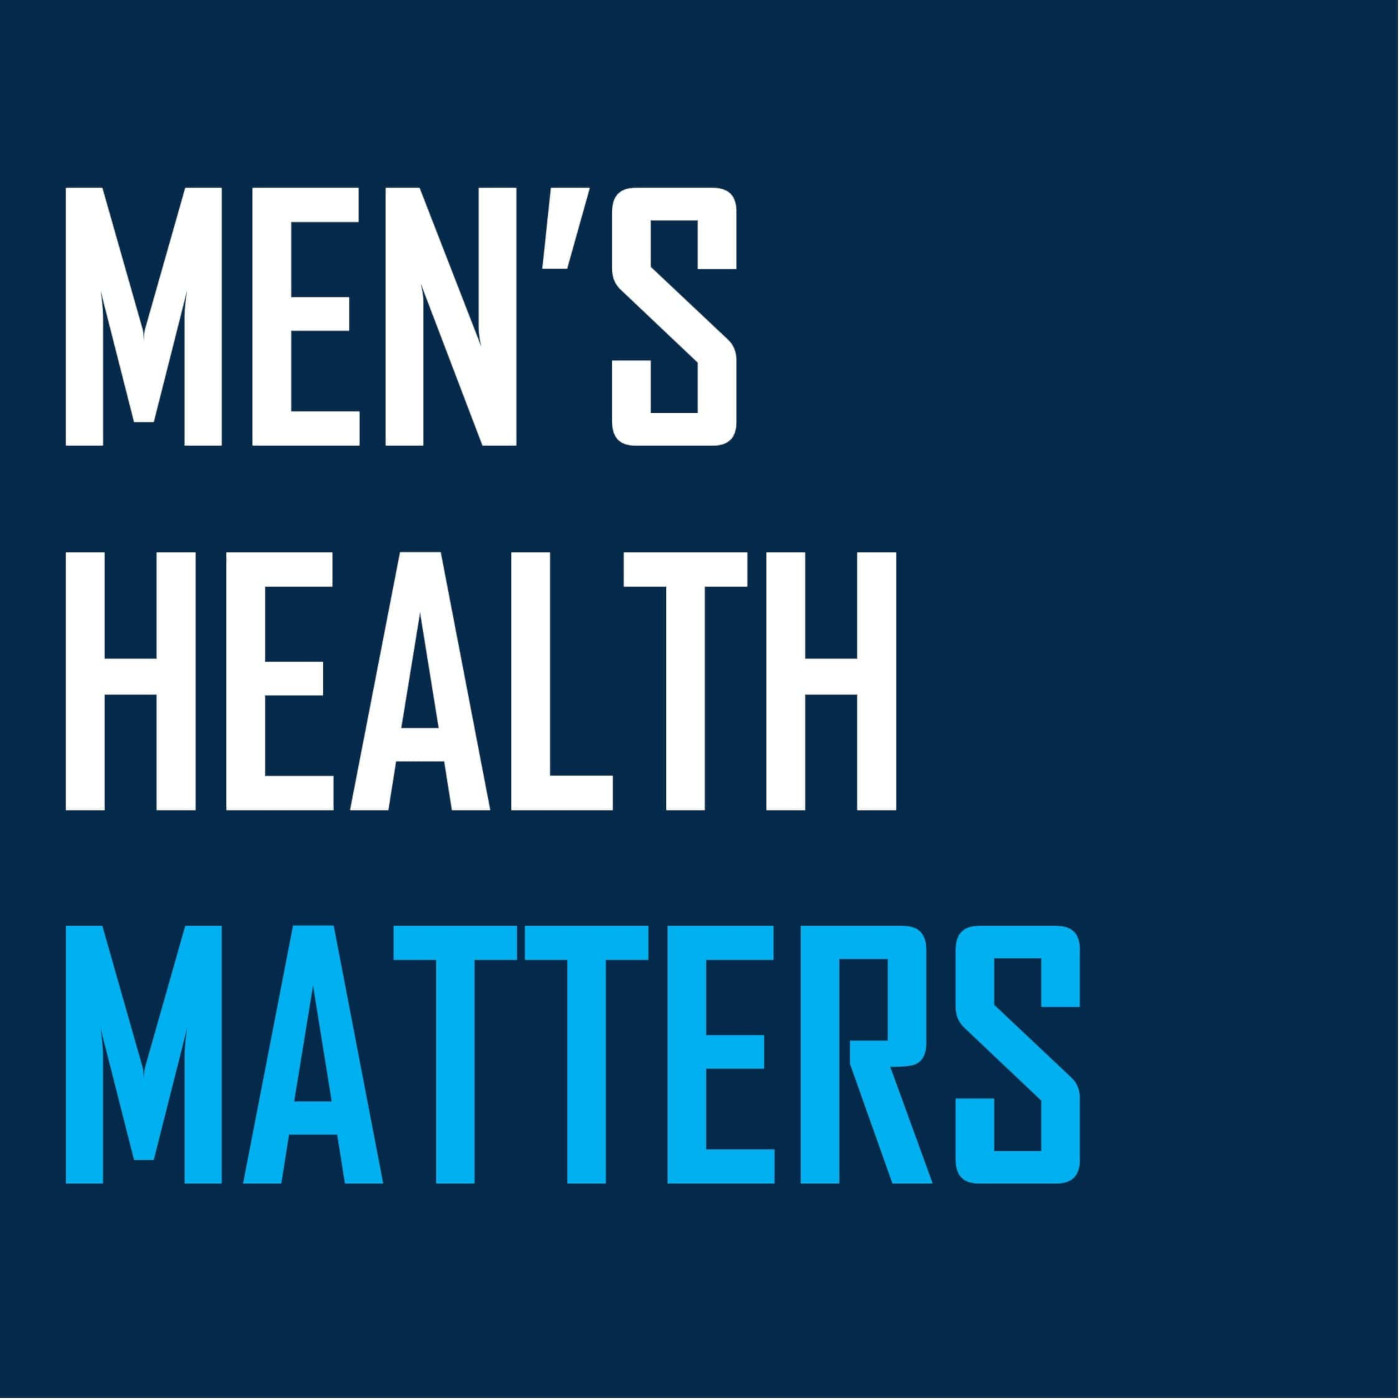 20210318161808-mens-health-matters1400x1400-14